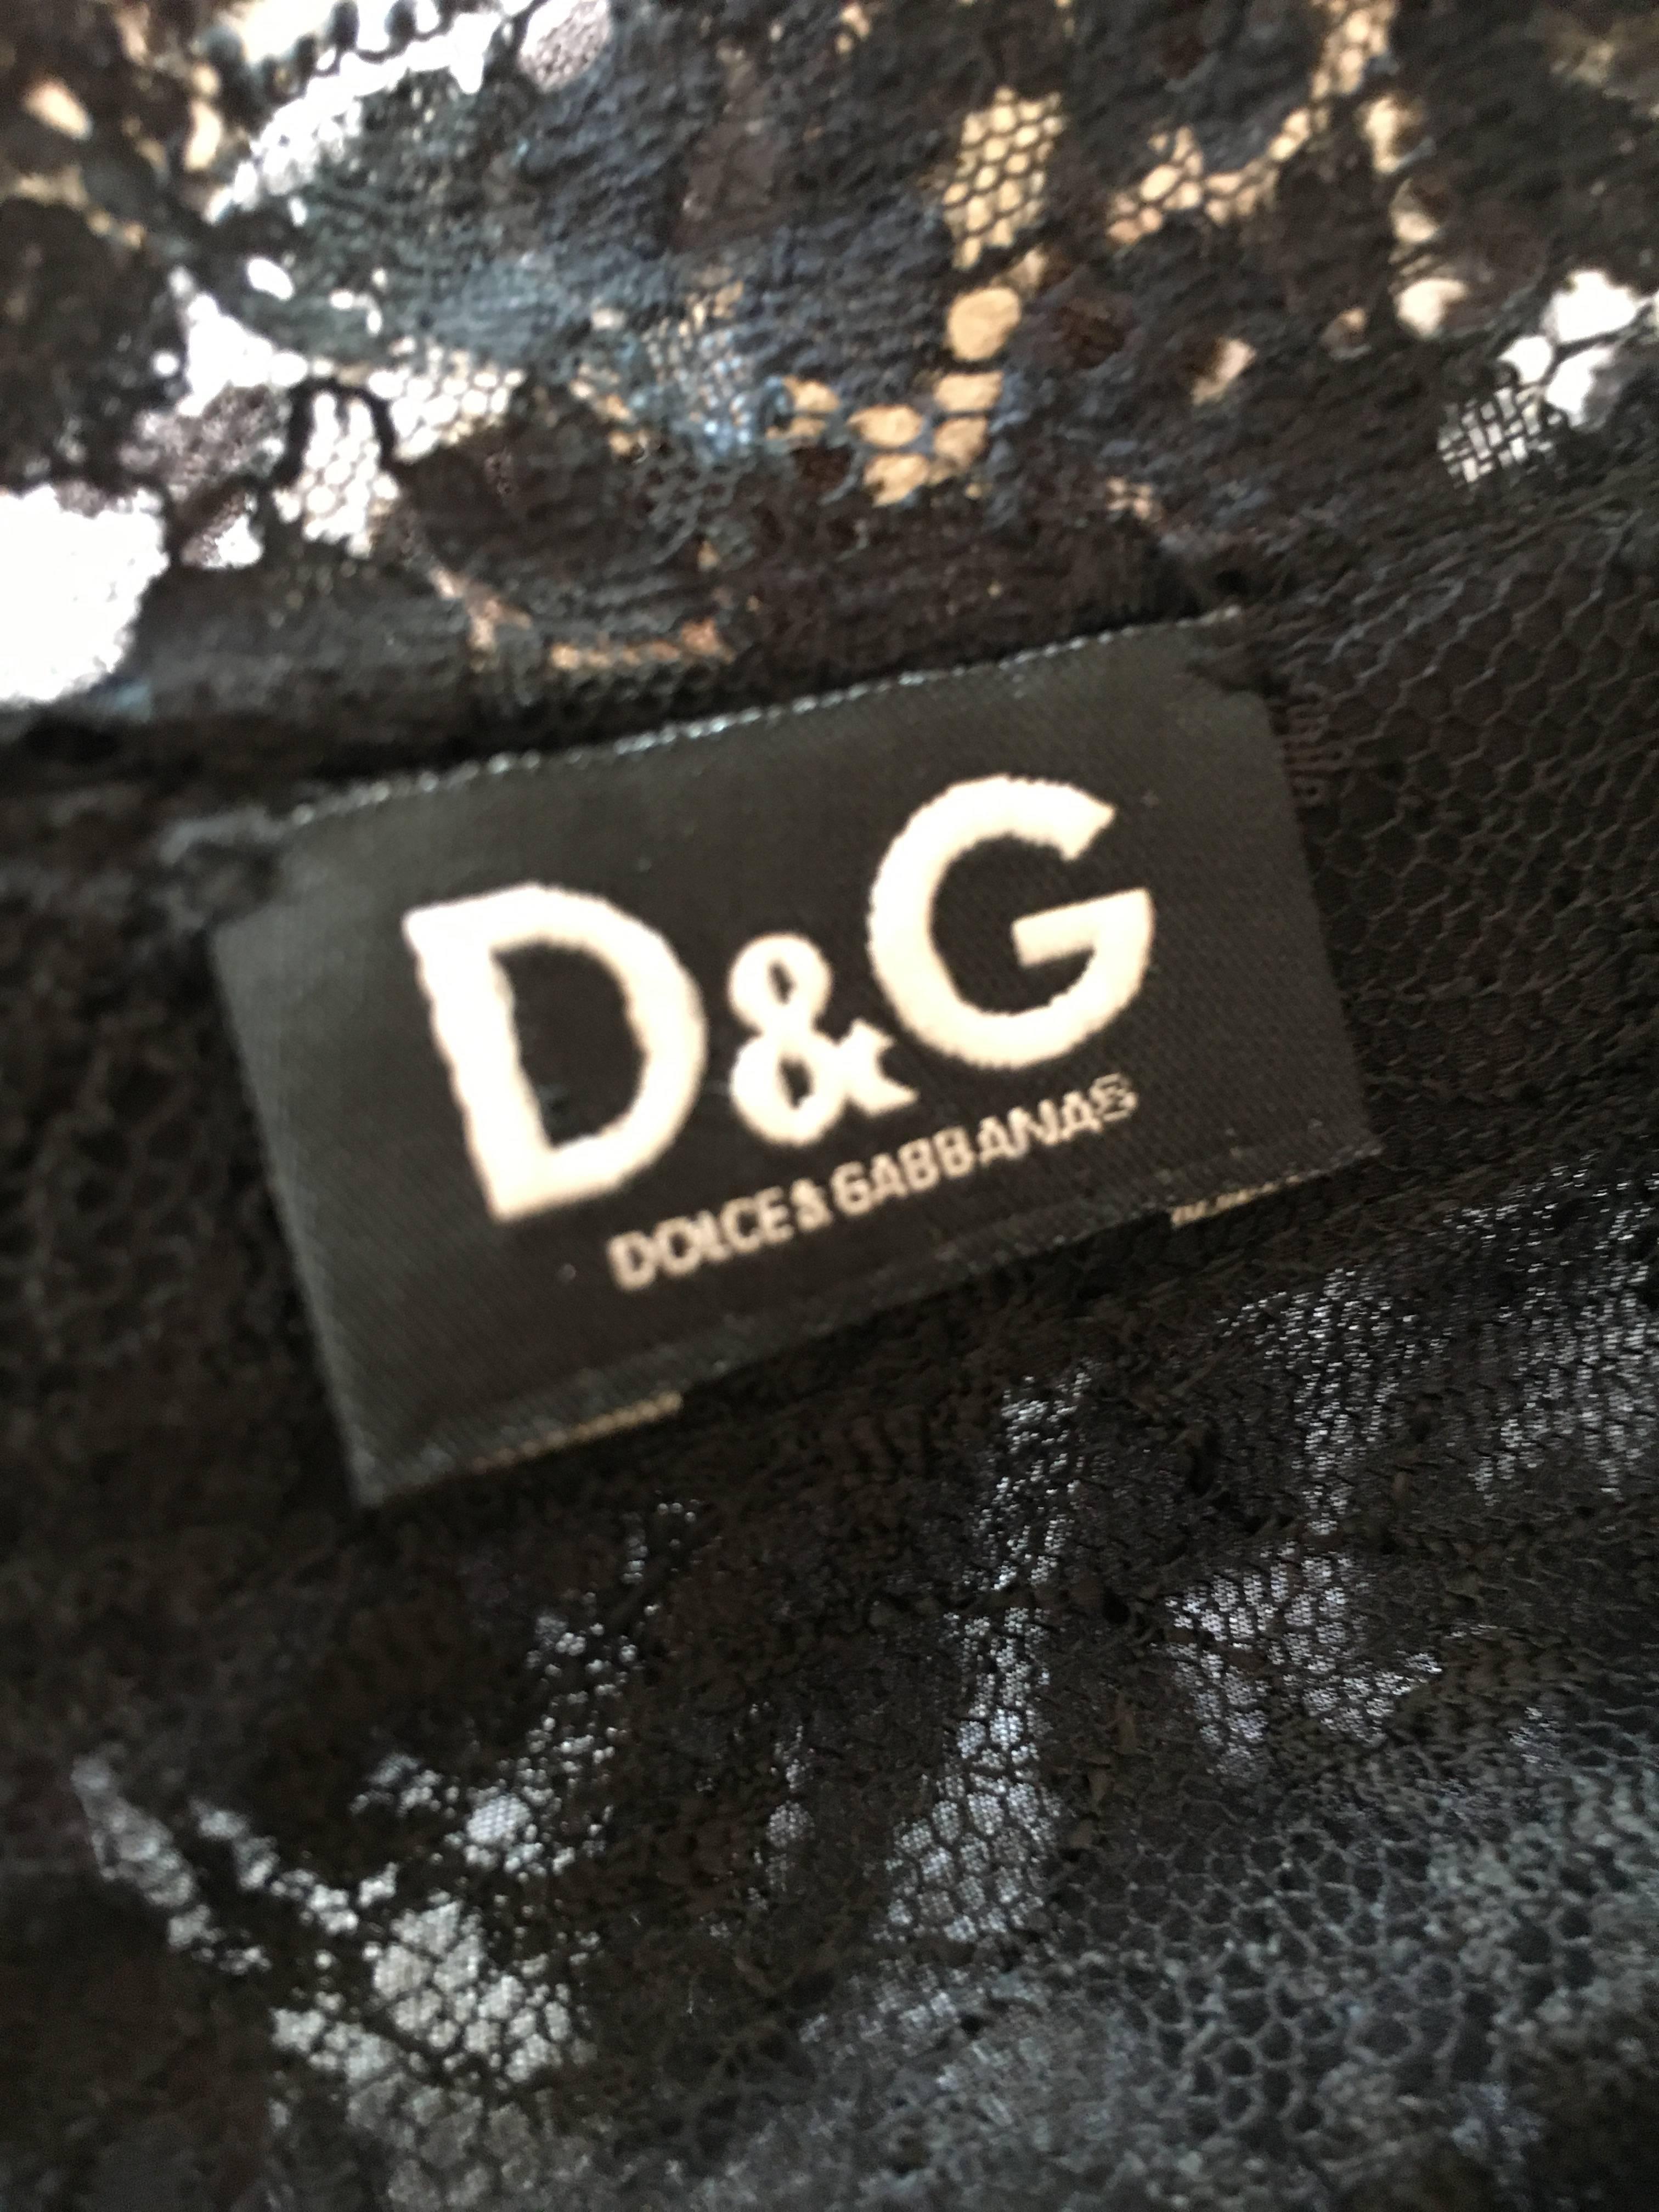 D&G Dolce & Gabbana Mod Print Cocktail Dress with Sheer Bust 2